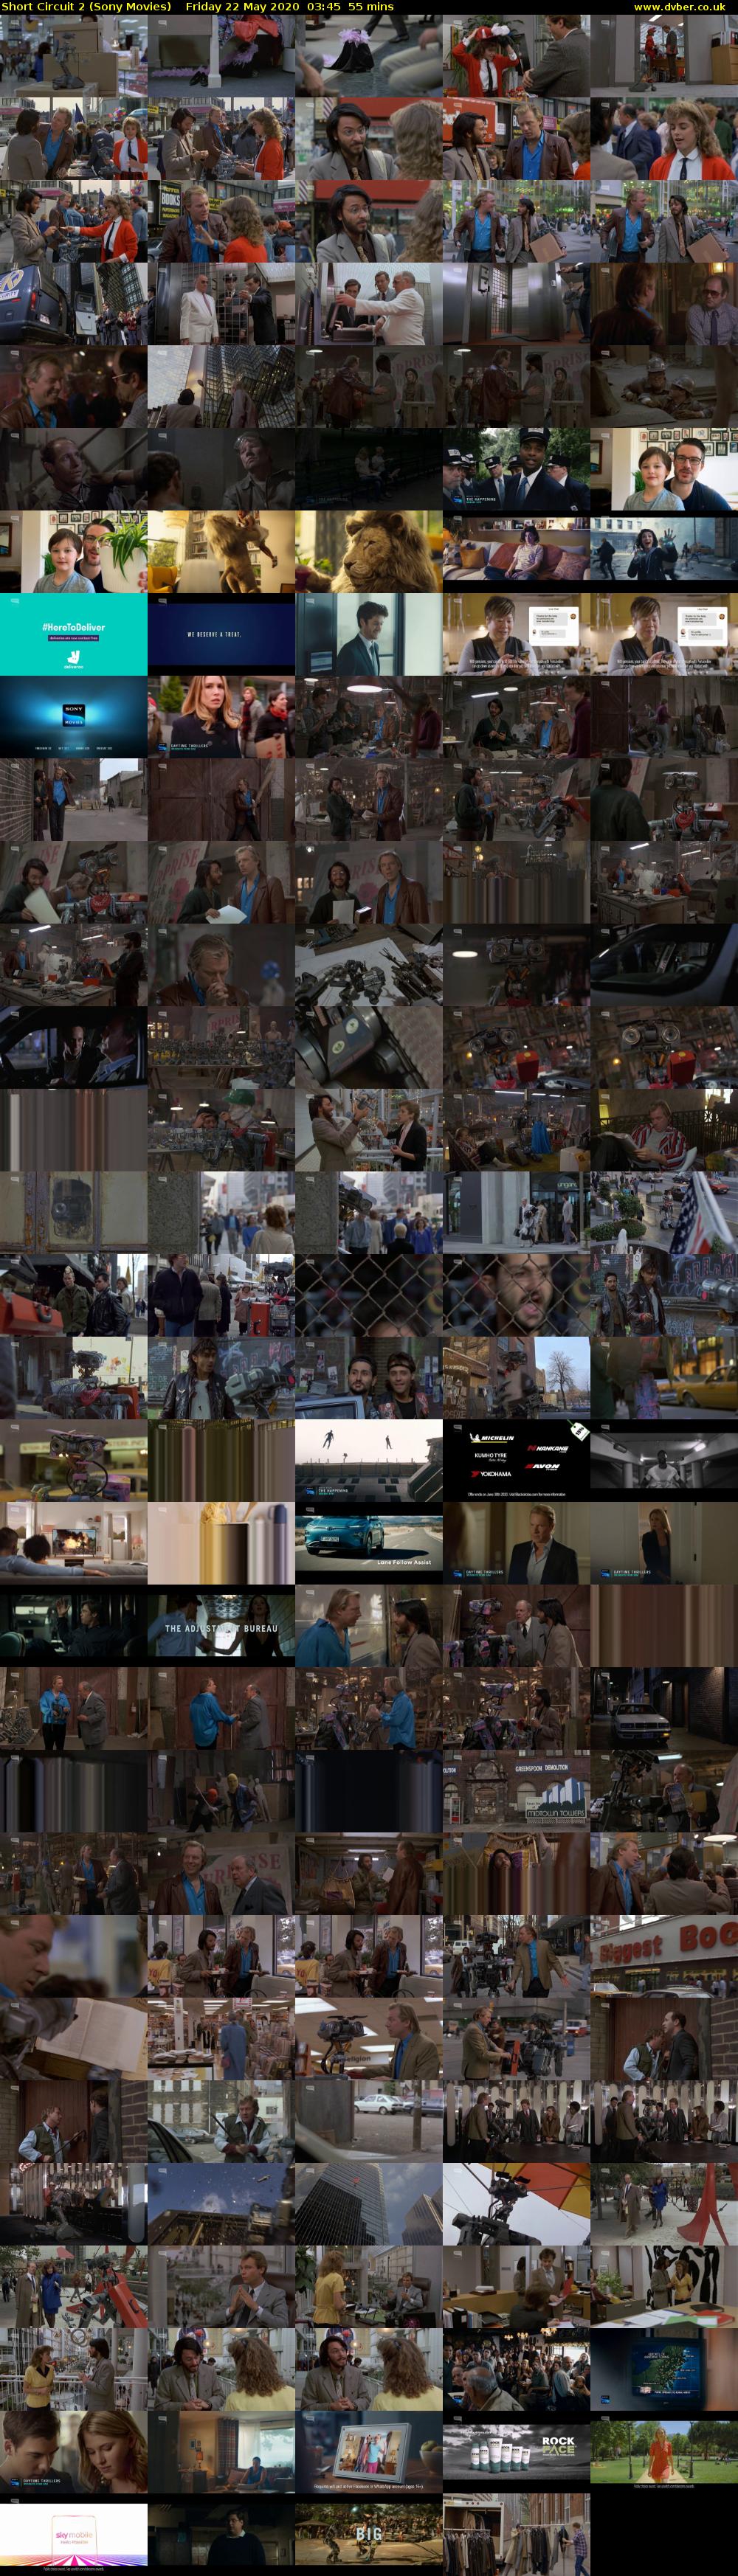 Short Circuit 2 (Sony Movies) Friday 22 May 2020 03:45 - 04:40